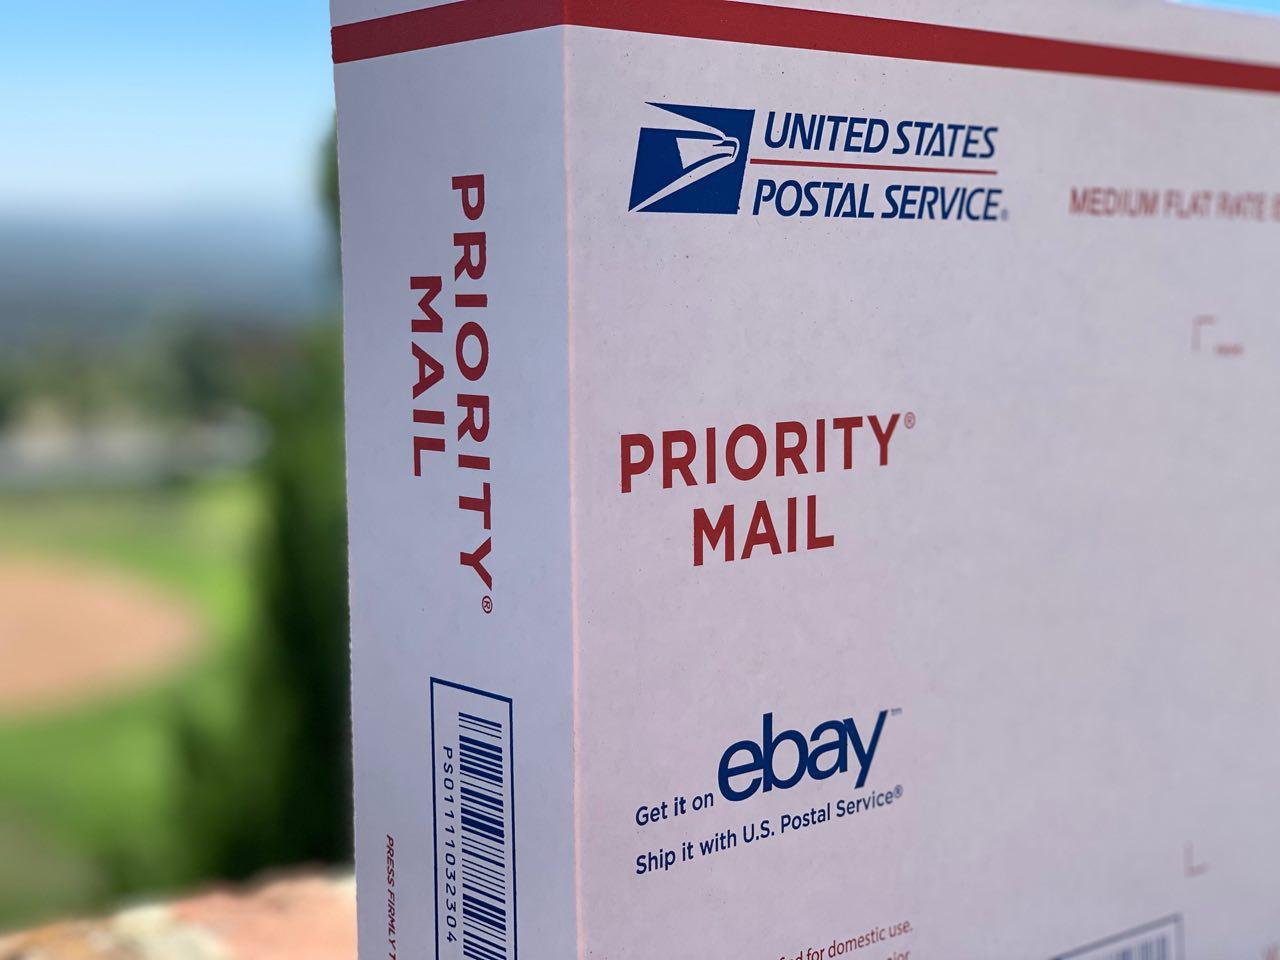 Mail at eBay